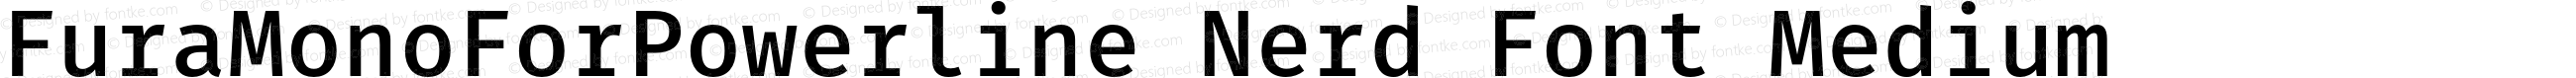 Fura Mono Medium for Powerline Nerd Font Plus Font Awesome Plus Octicons Plus Pomicons Mono